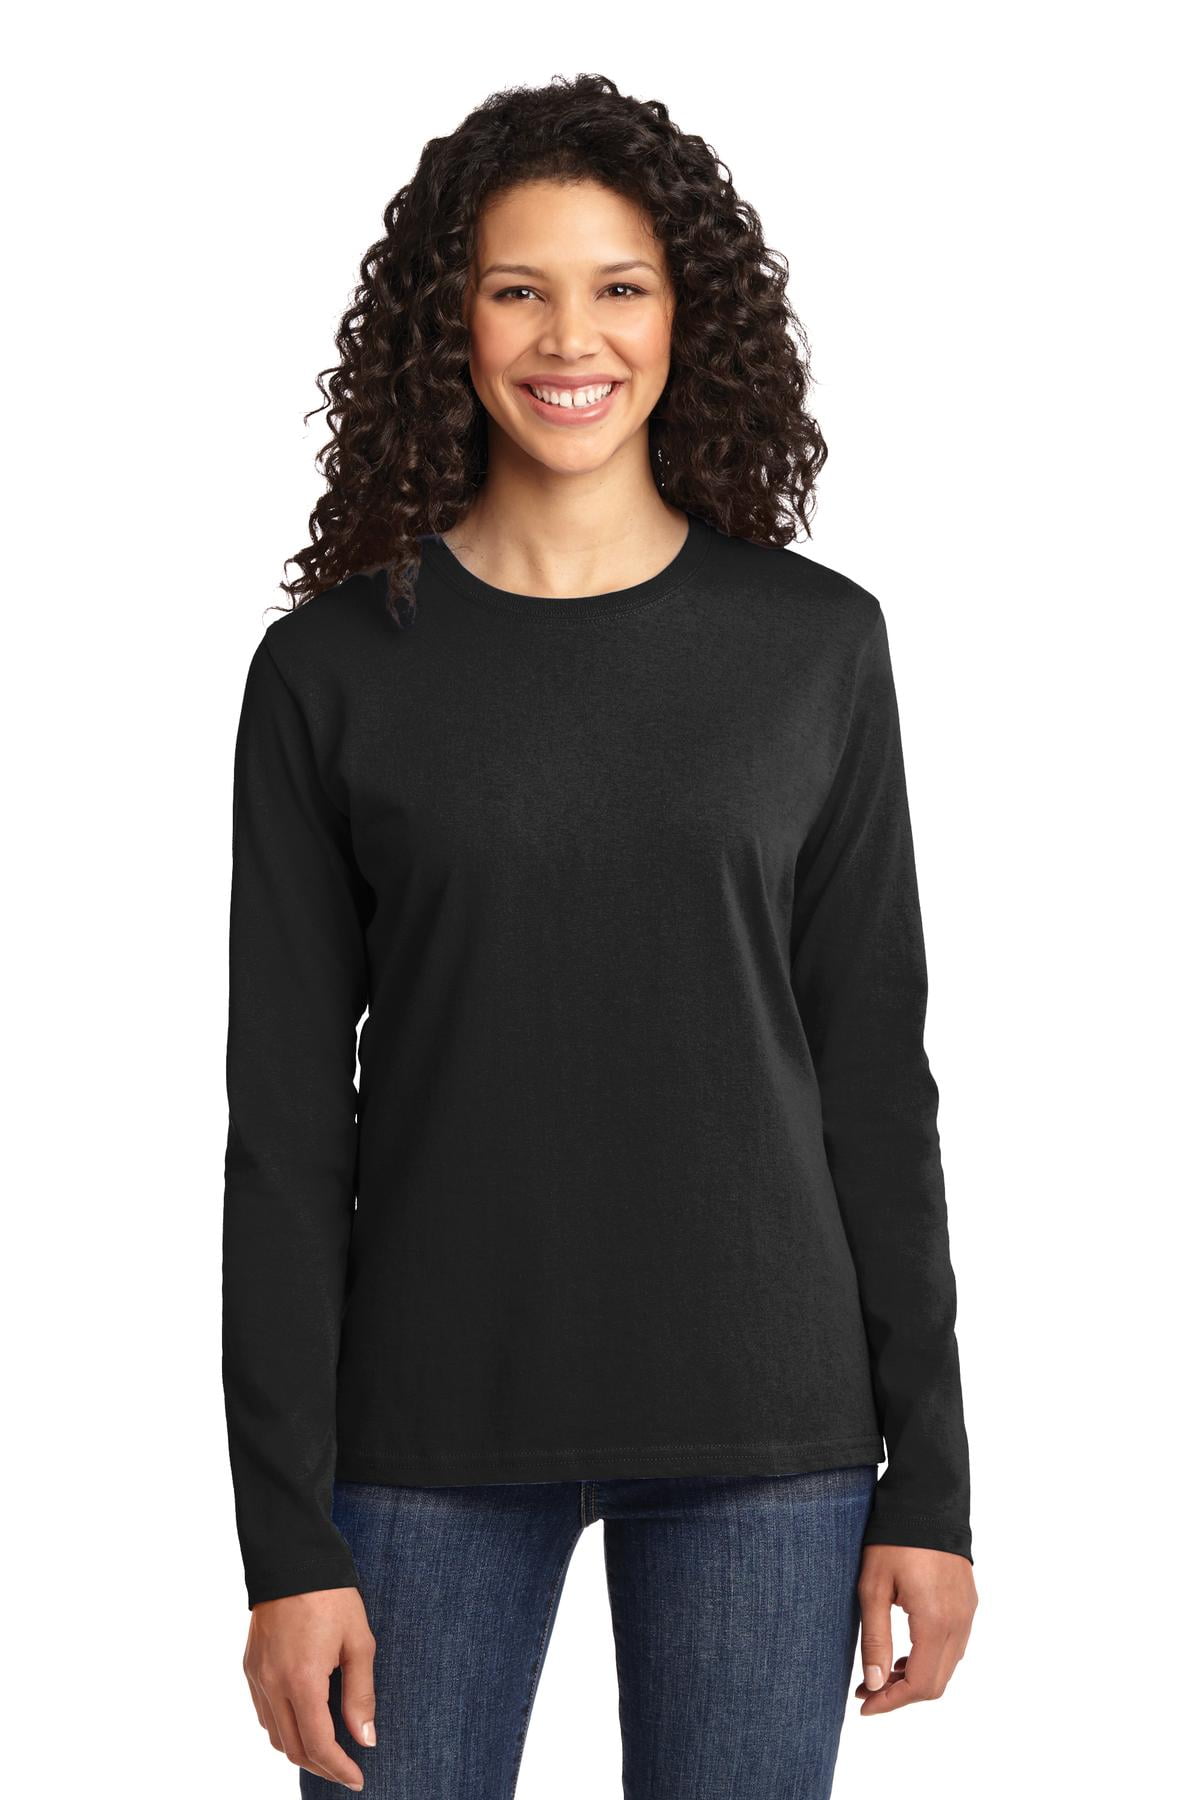 Port & Company Women's Long Sleeve Core Cotton T-Shirt LPC54LS ...